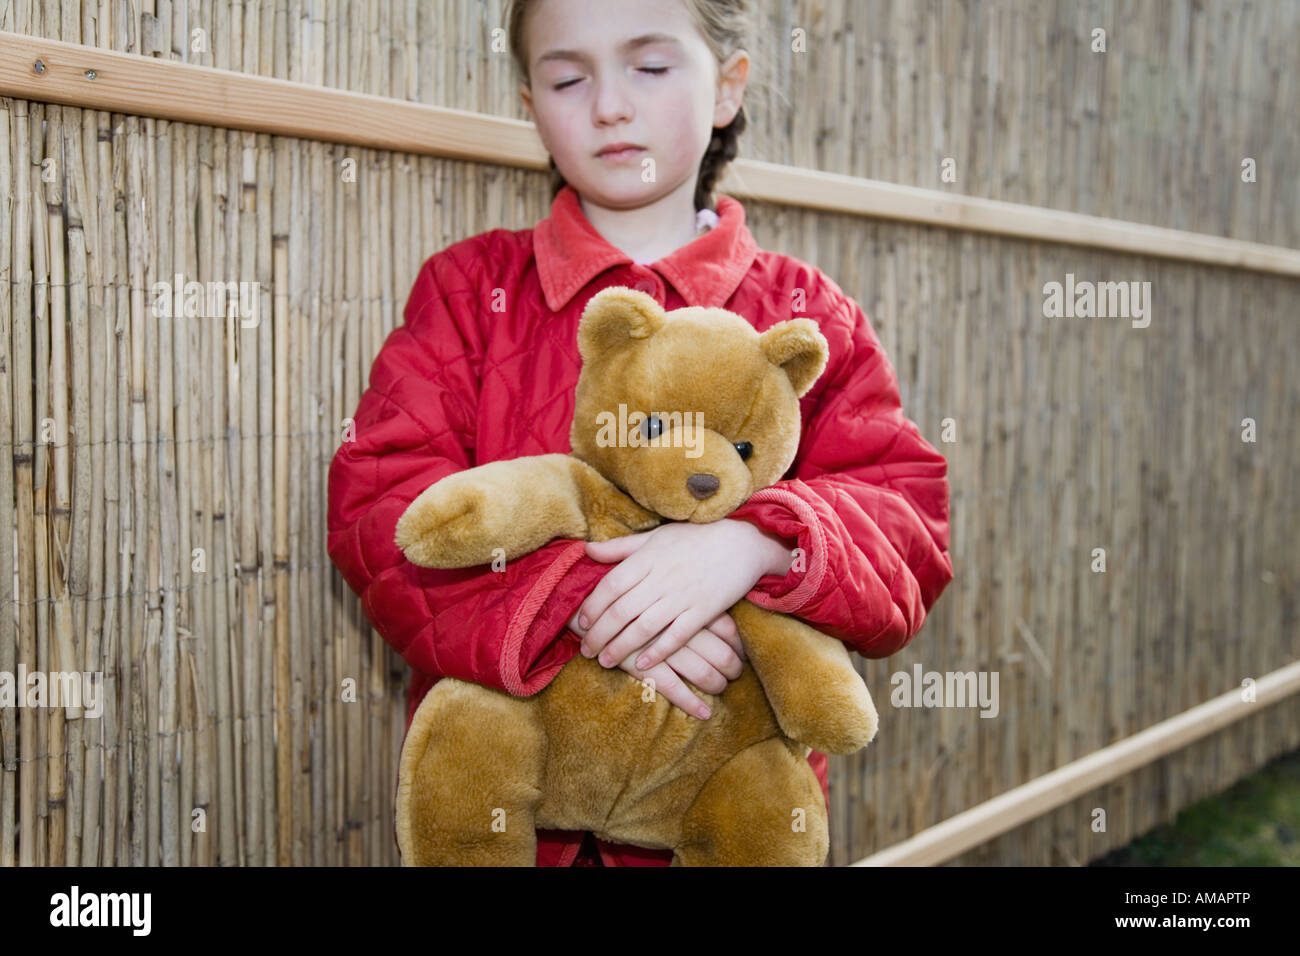 A young girl holding a teddy bear Stock Photo